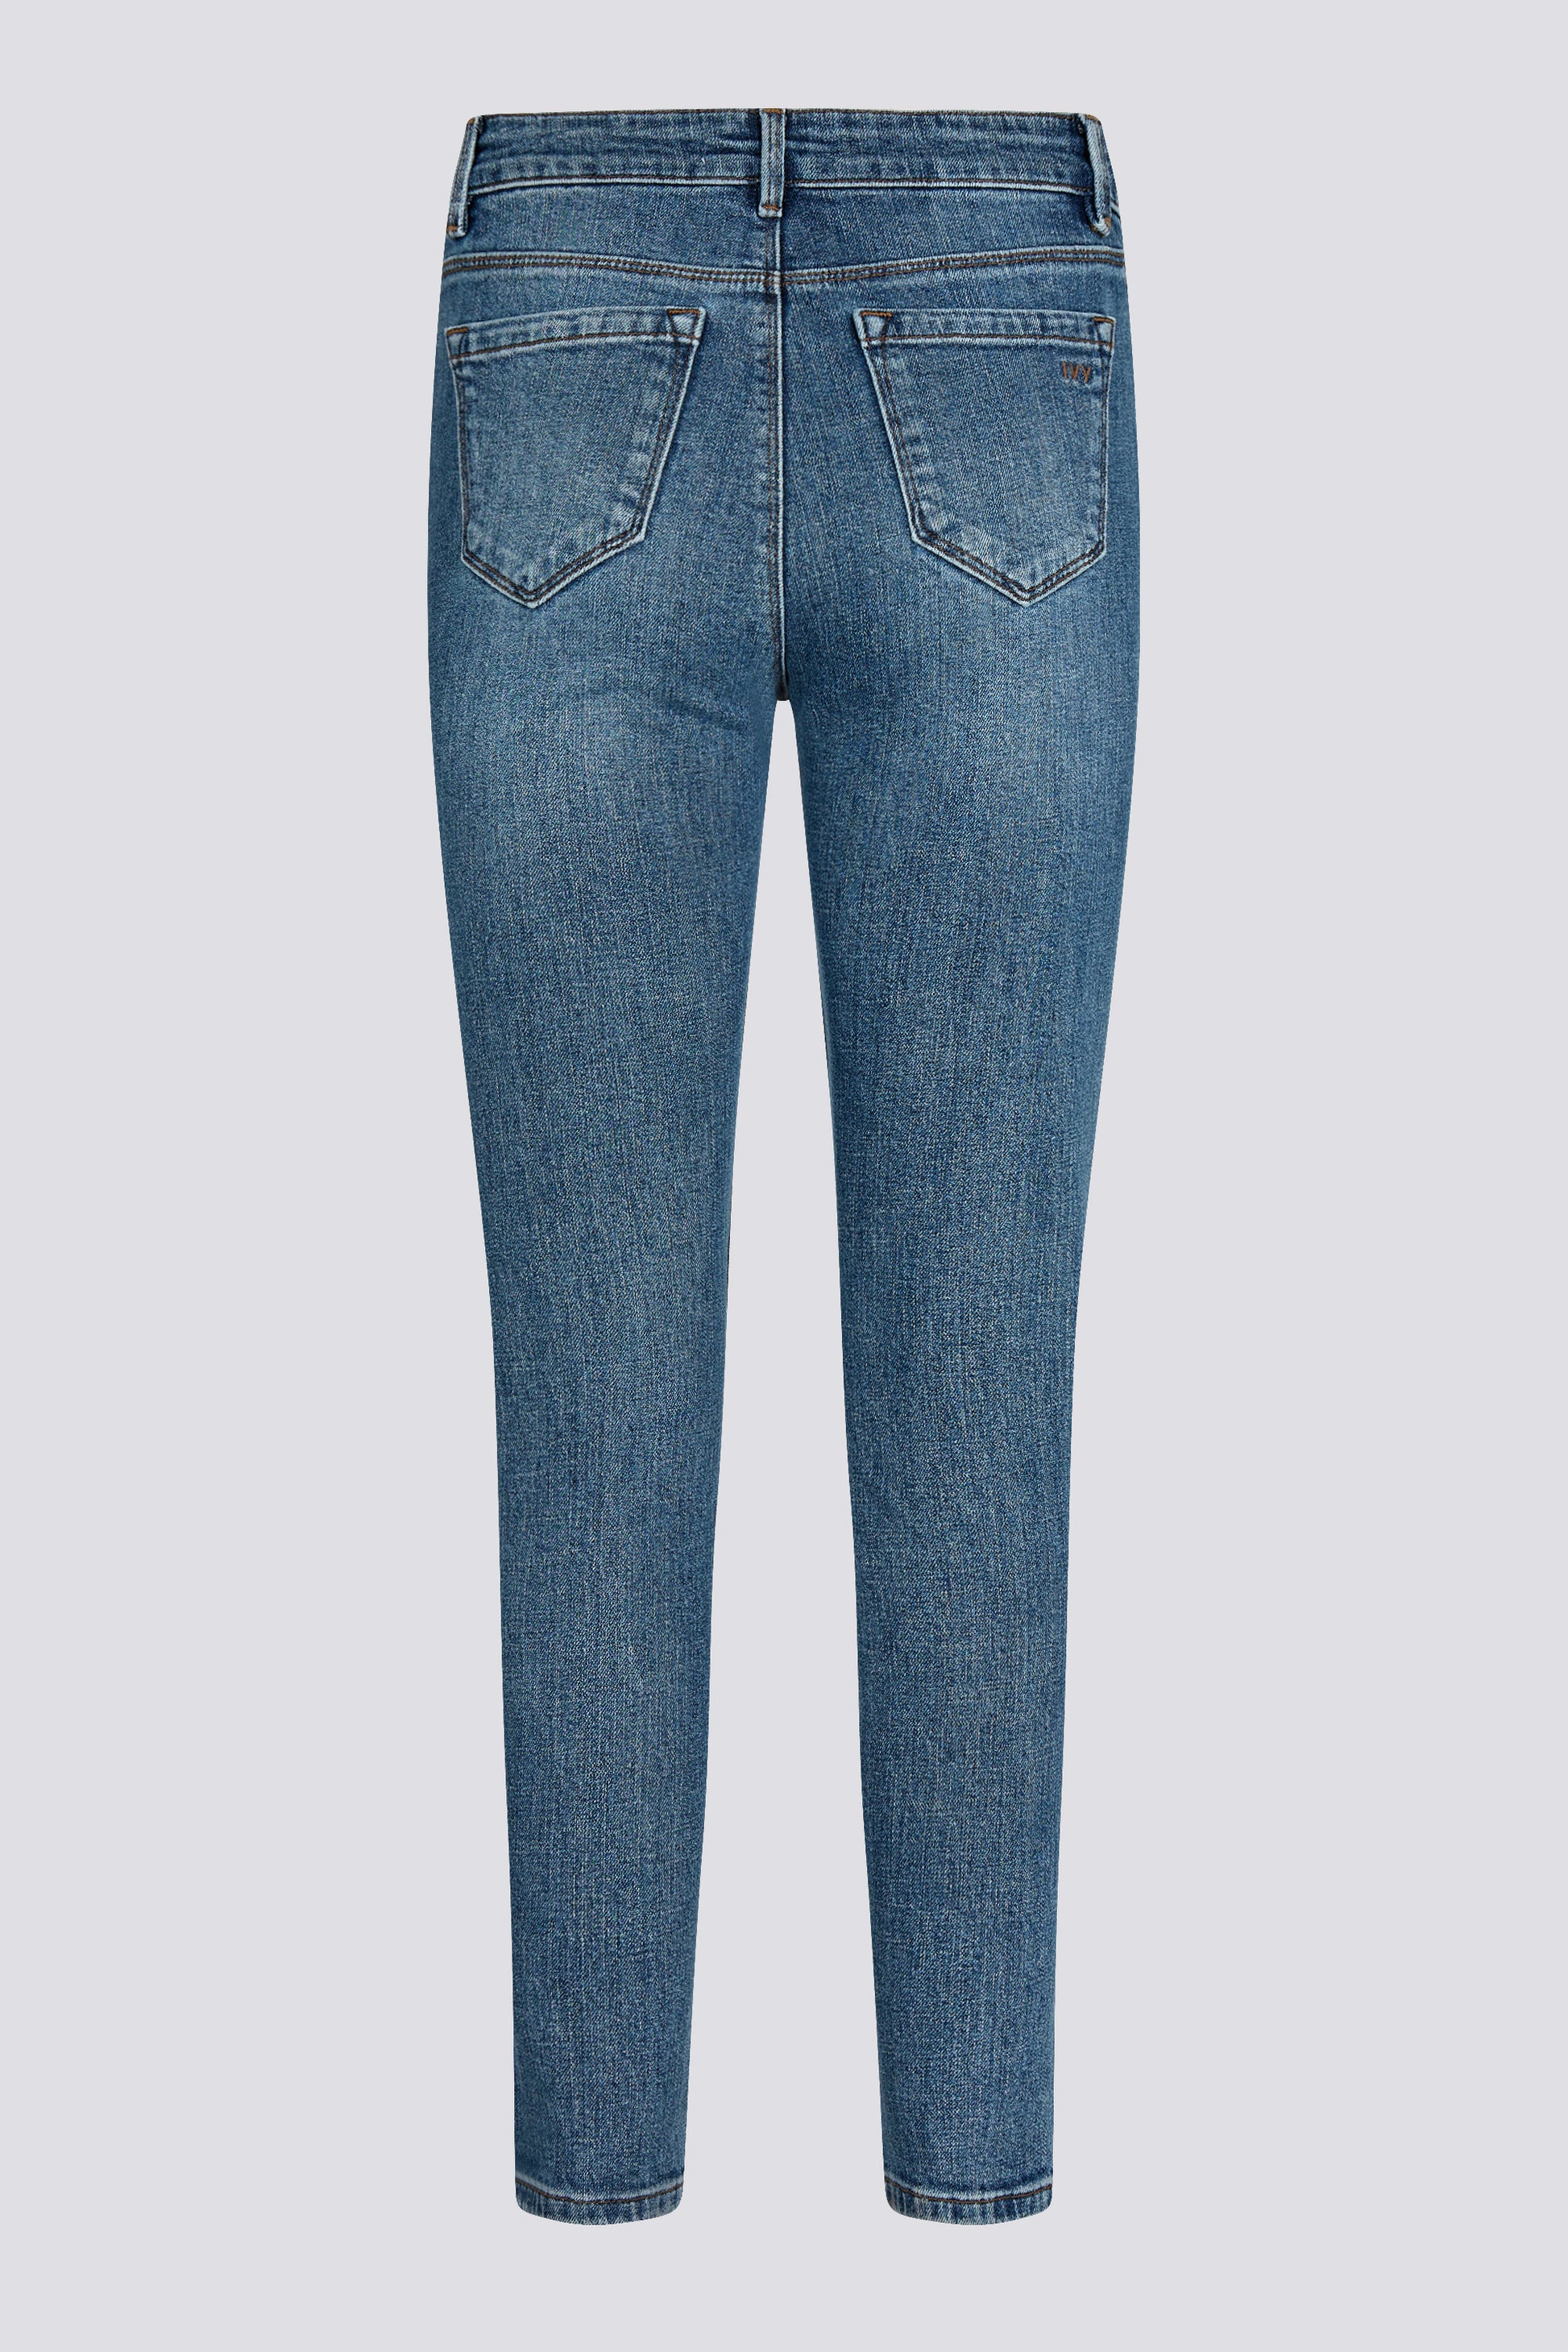 IVY Copenhagen IVY-Alexa Jeans Wash Derby Jeans & Pants